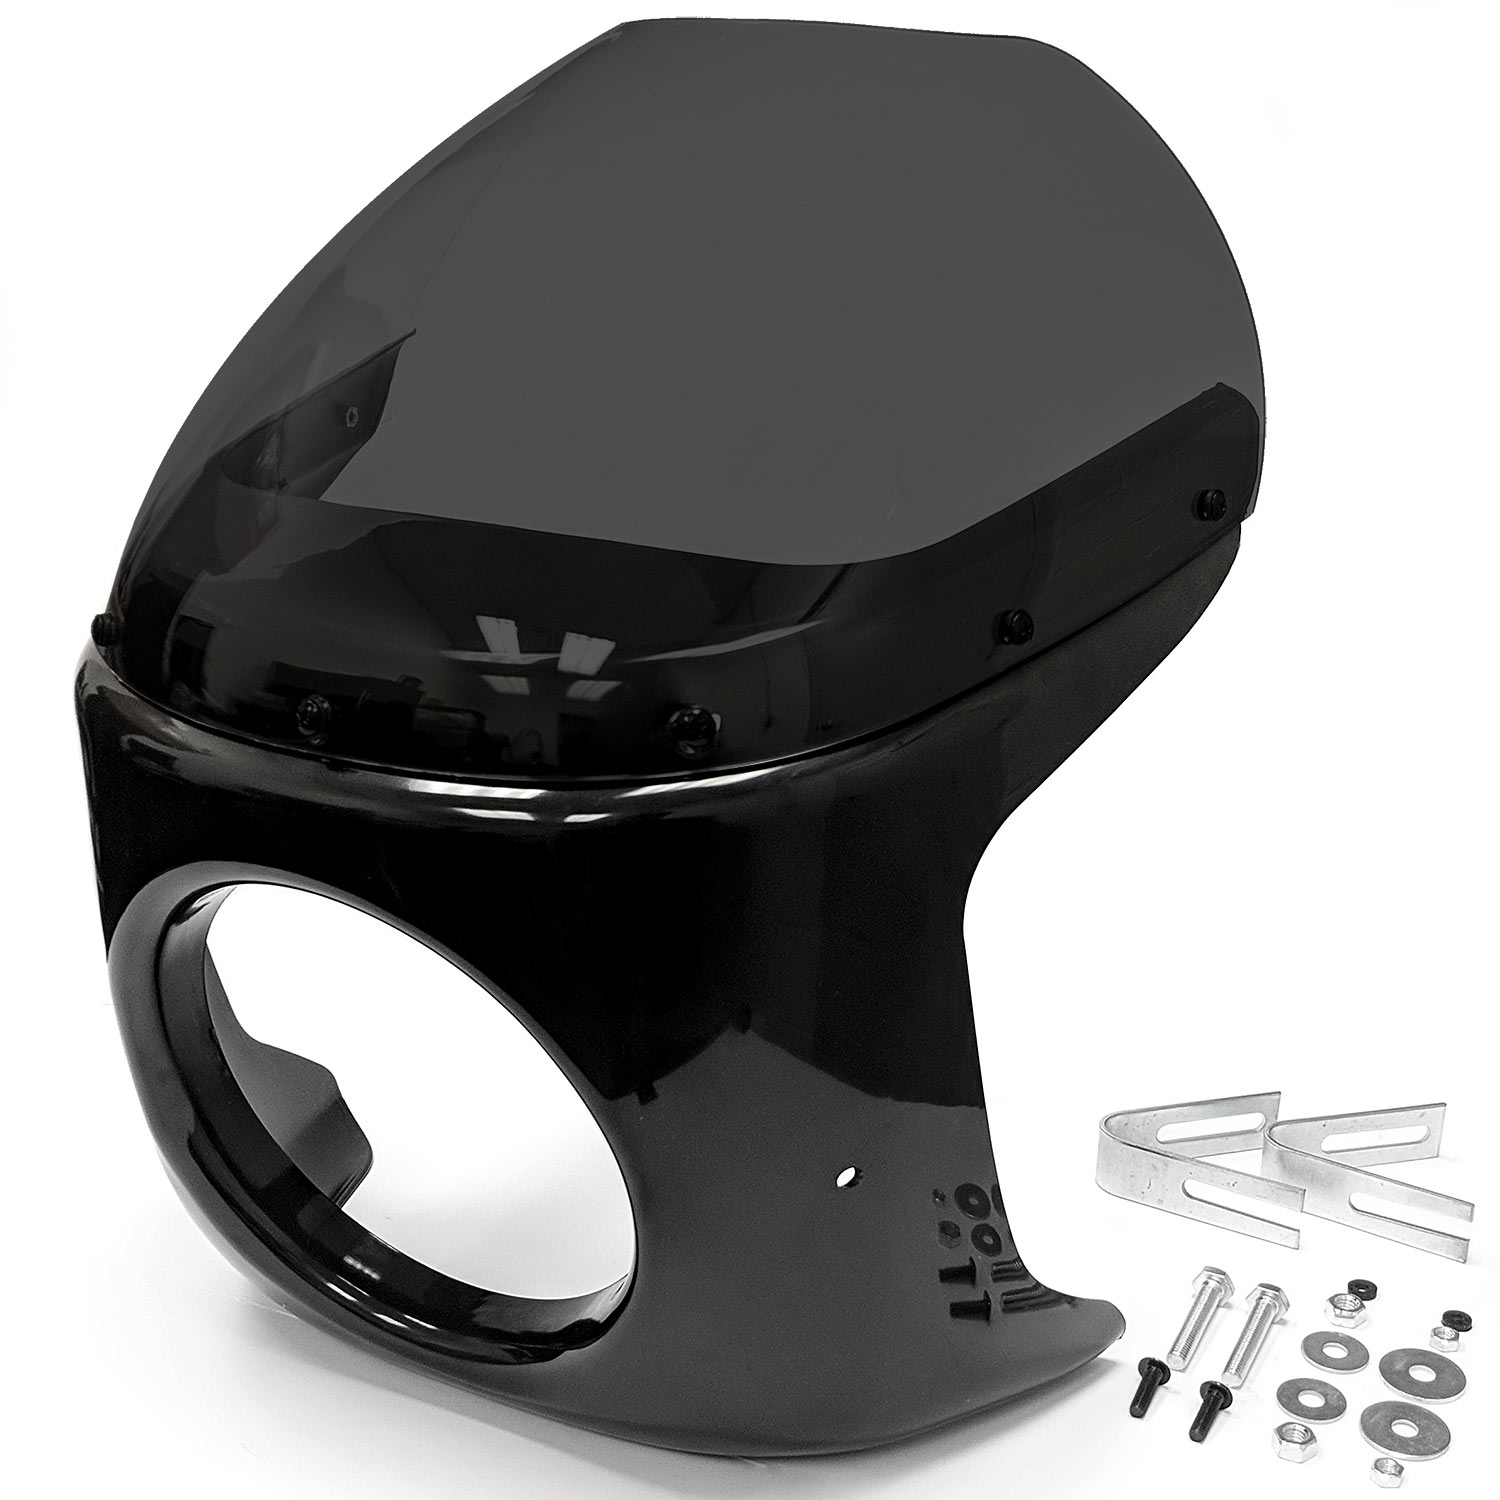 Krator Motorcycle 7 inch Headlight Fairing Screen Black & Smoke Compatible with Kawasaki EN 450 500 (Modification Maybe Required)